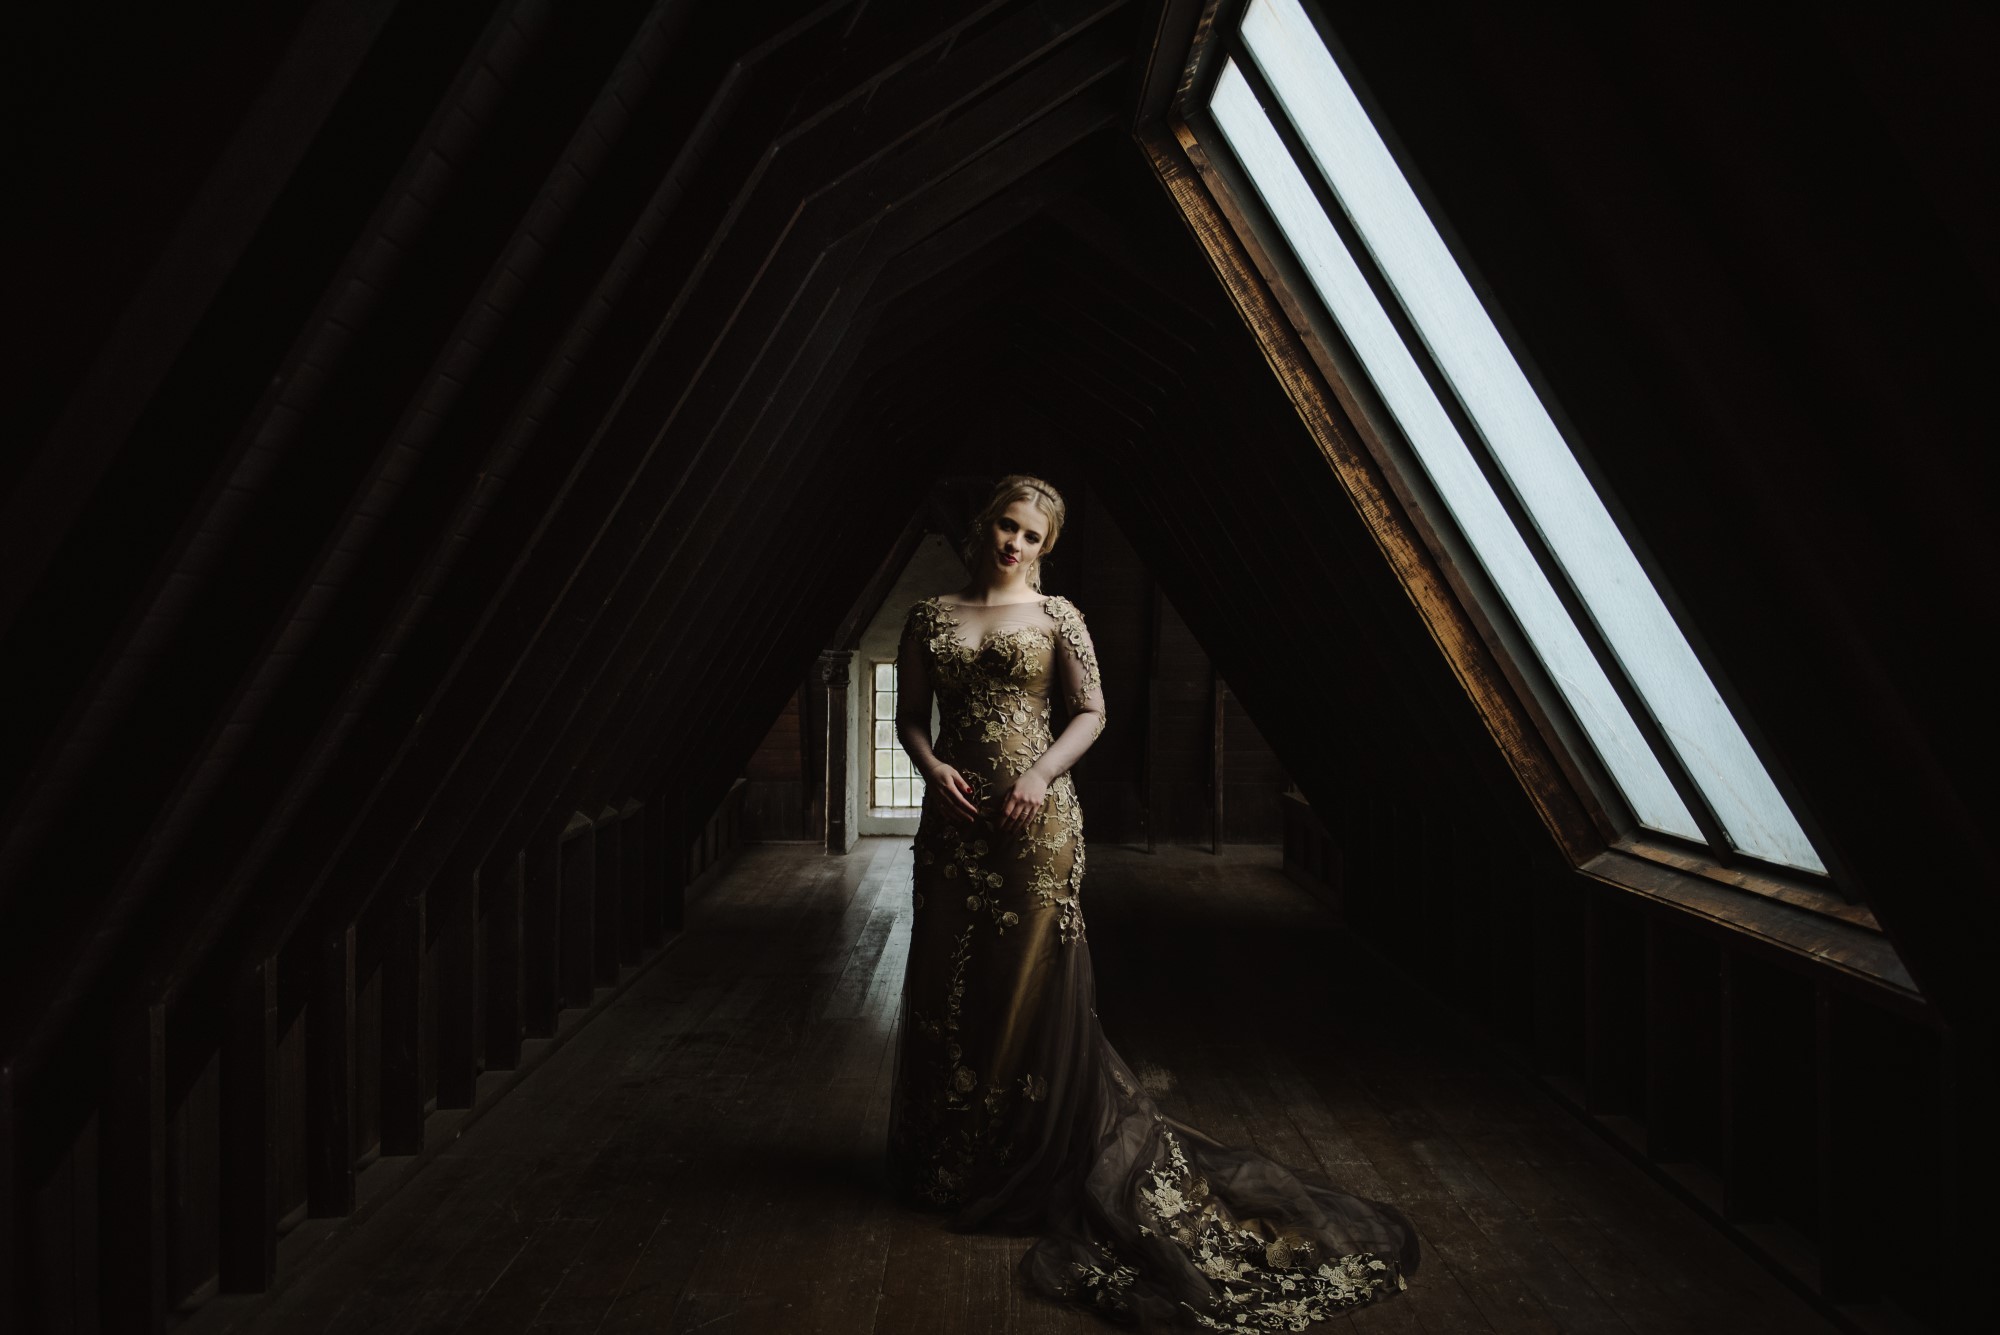 Bride in dark wooden hallway of an attic wearing a dark gold floral wedding dress with a train